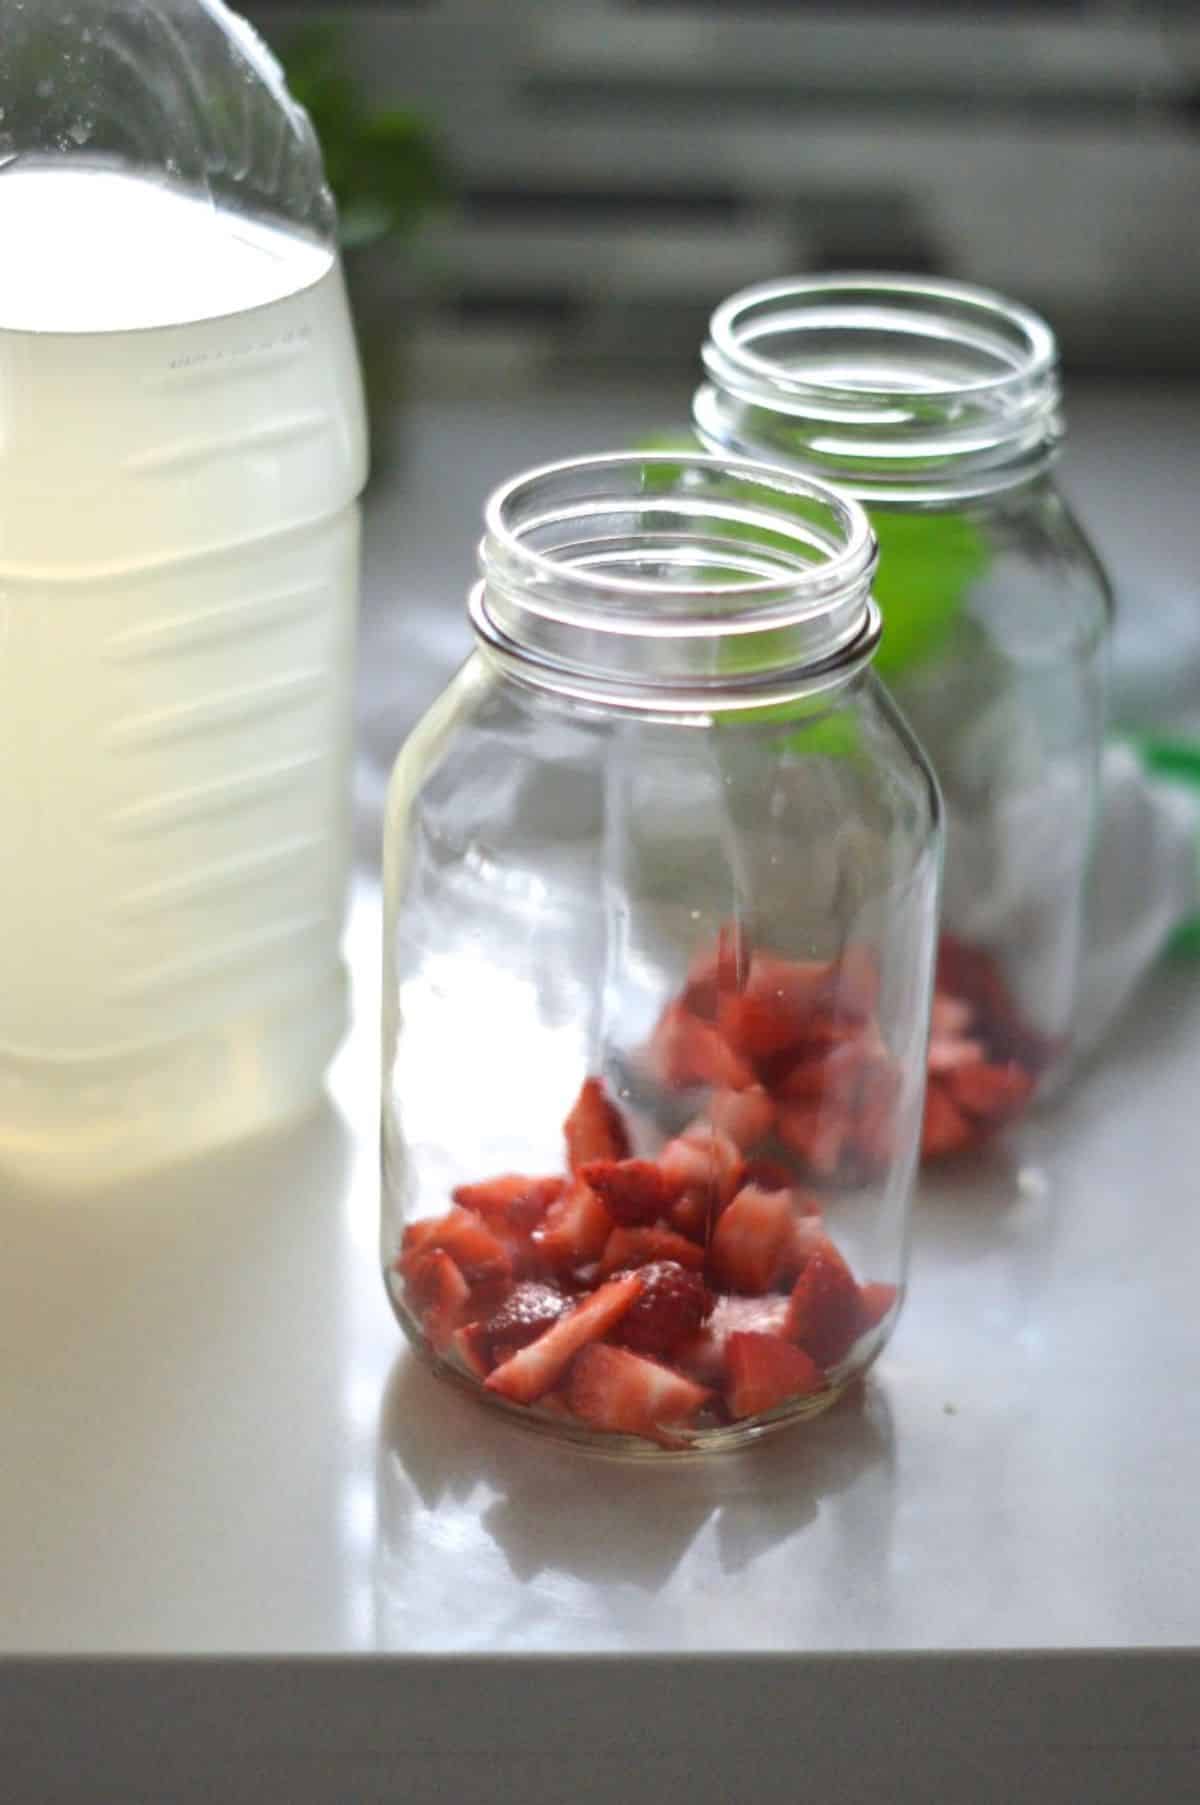 Chopped strawberries in a glass jars.